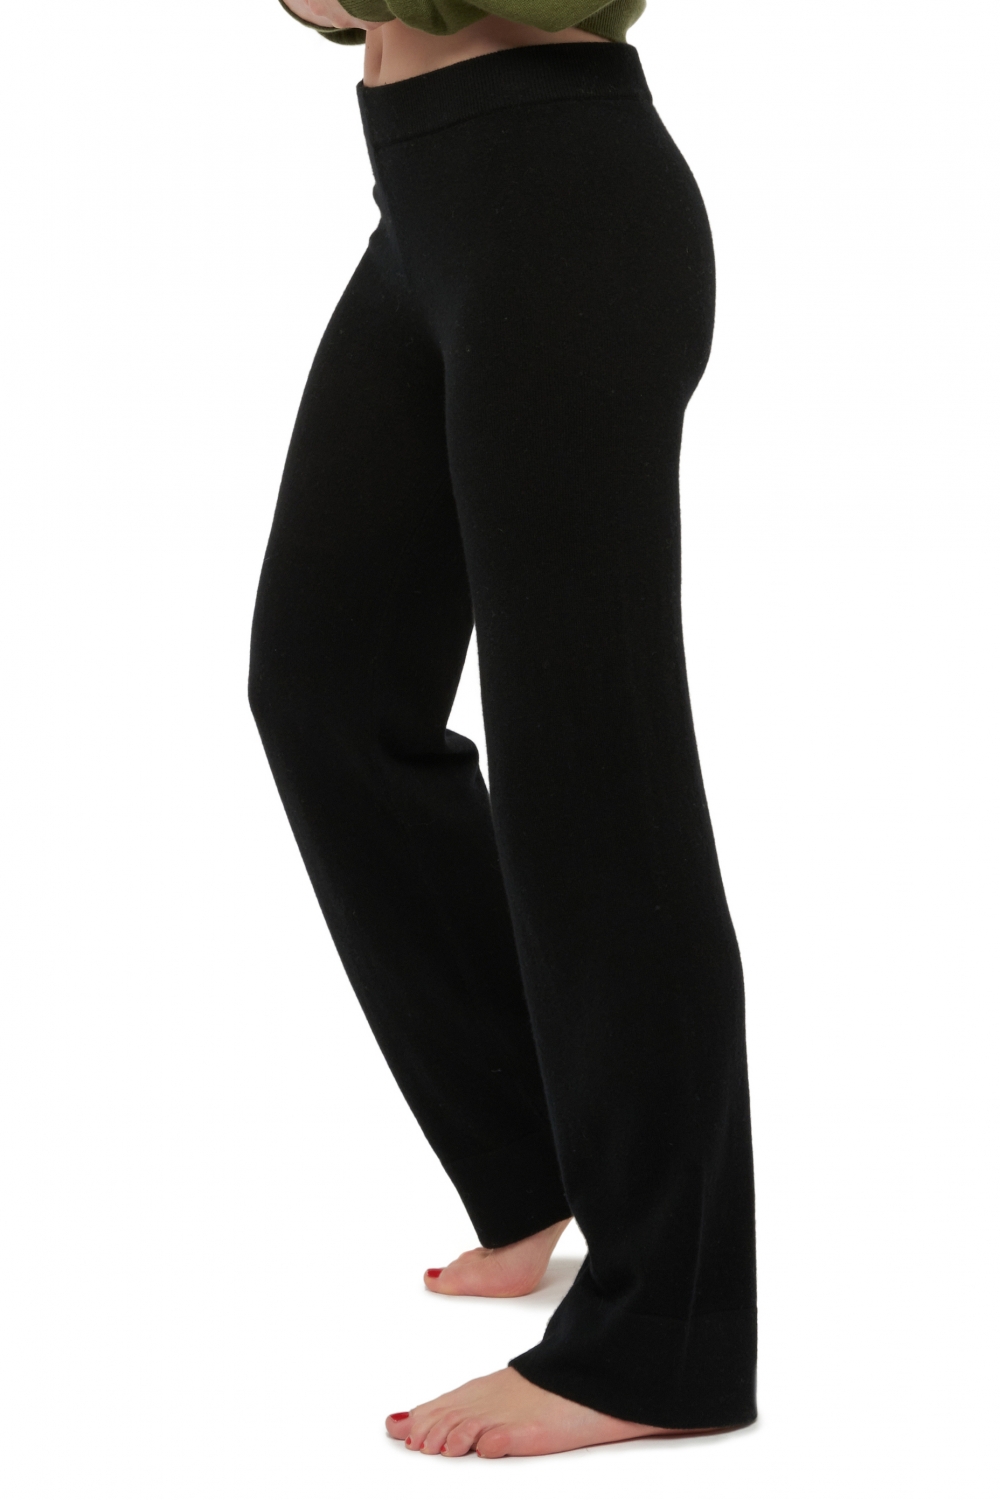 Cashmere donna pantaloni  leggings jeanette nero 2xl